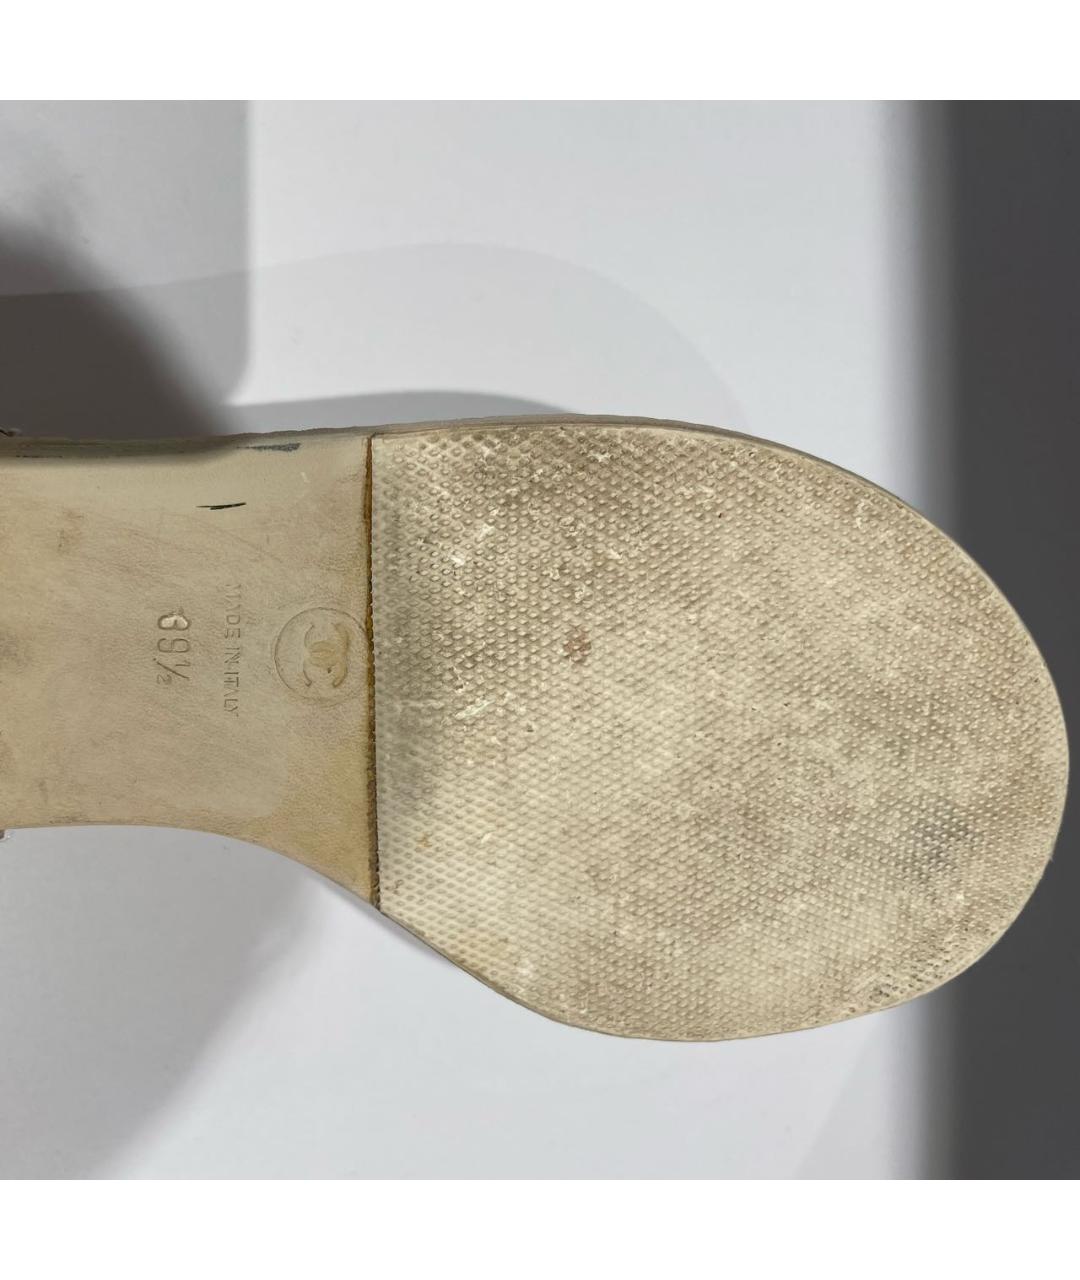 CHANEL PRE-OWNED Бежевые кожаные сандалии, фото 6